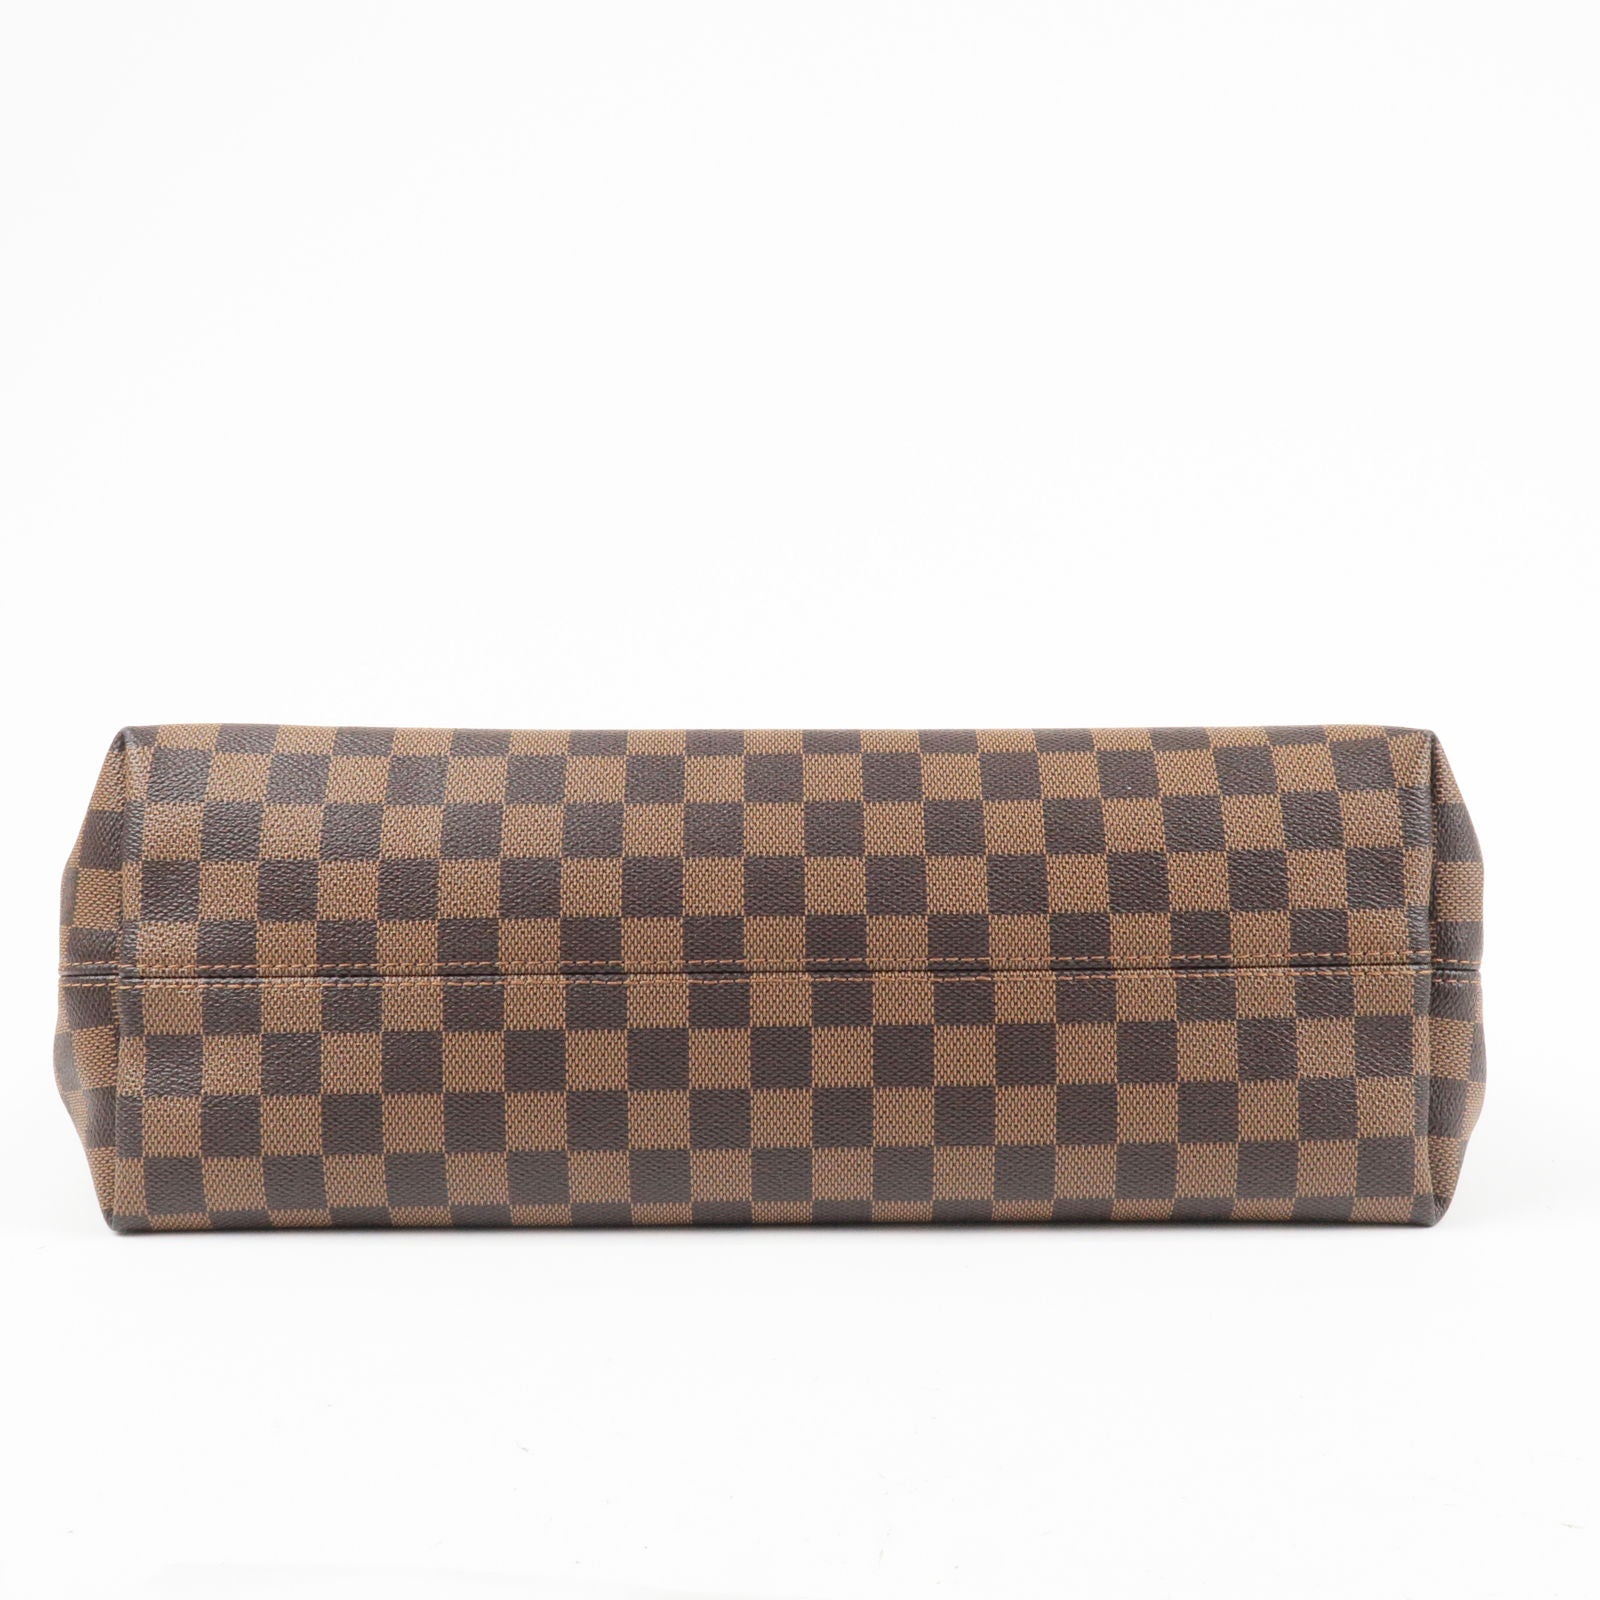 Buy Louis Vuitton Damier Ebene Graceful MM Tote Handbag Article:N44045 at